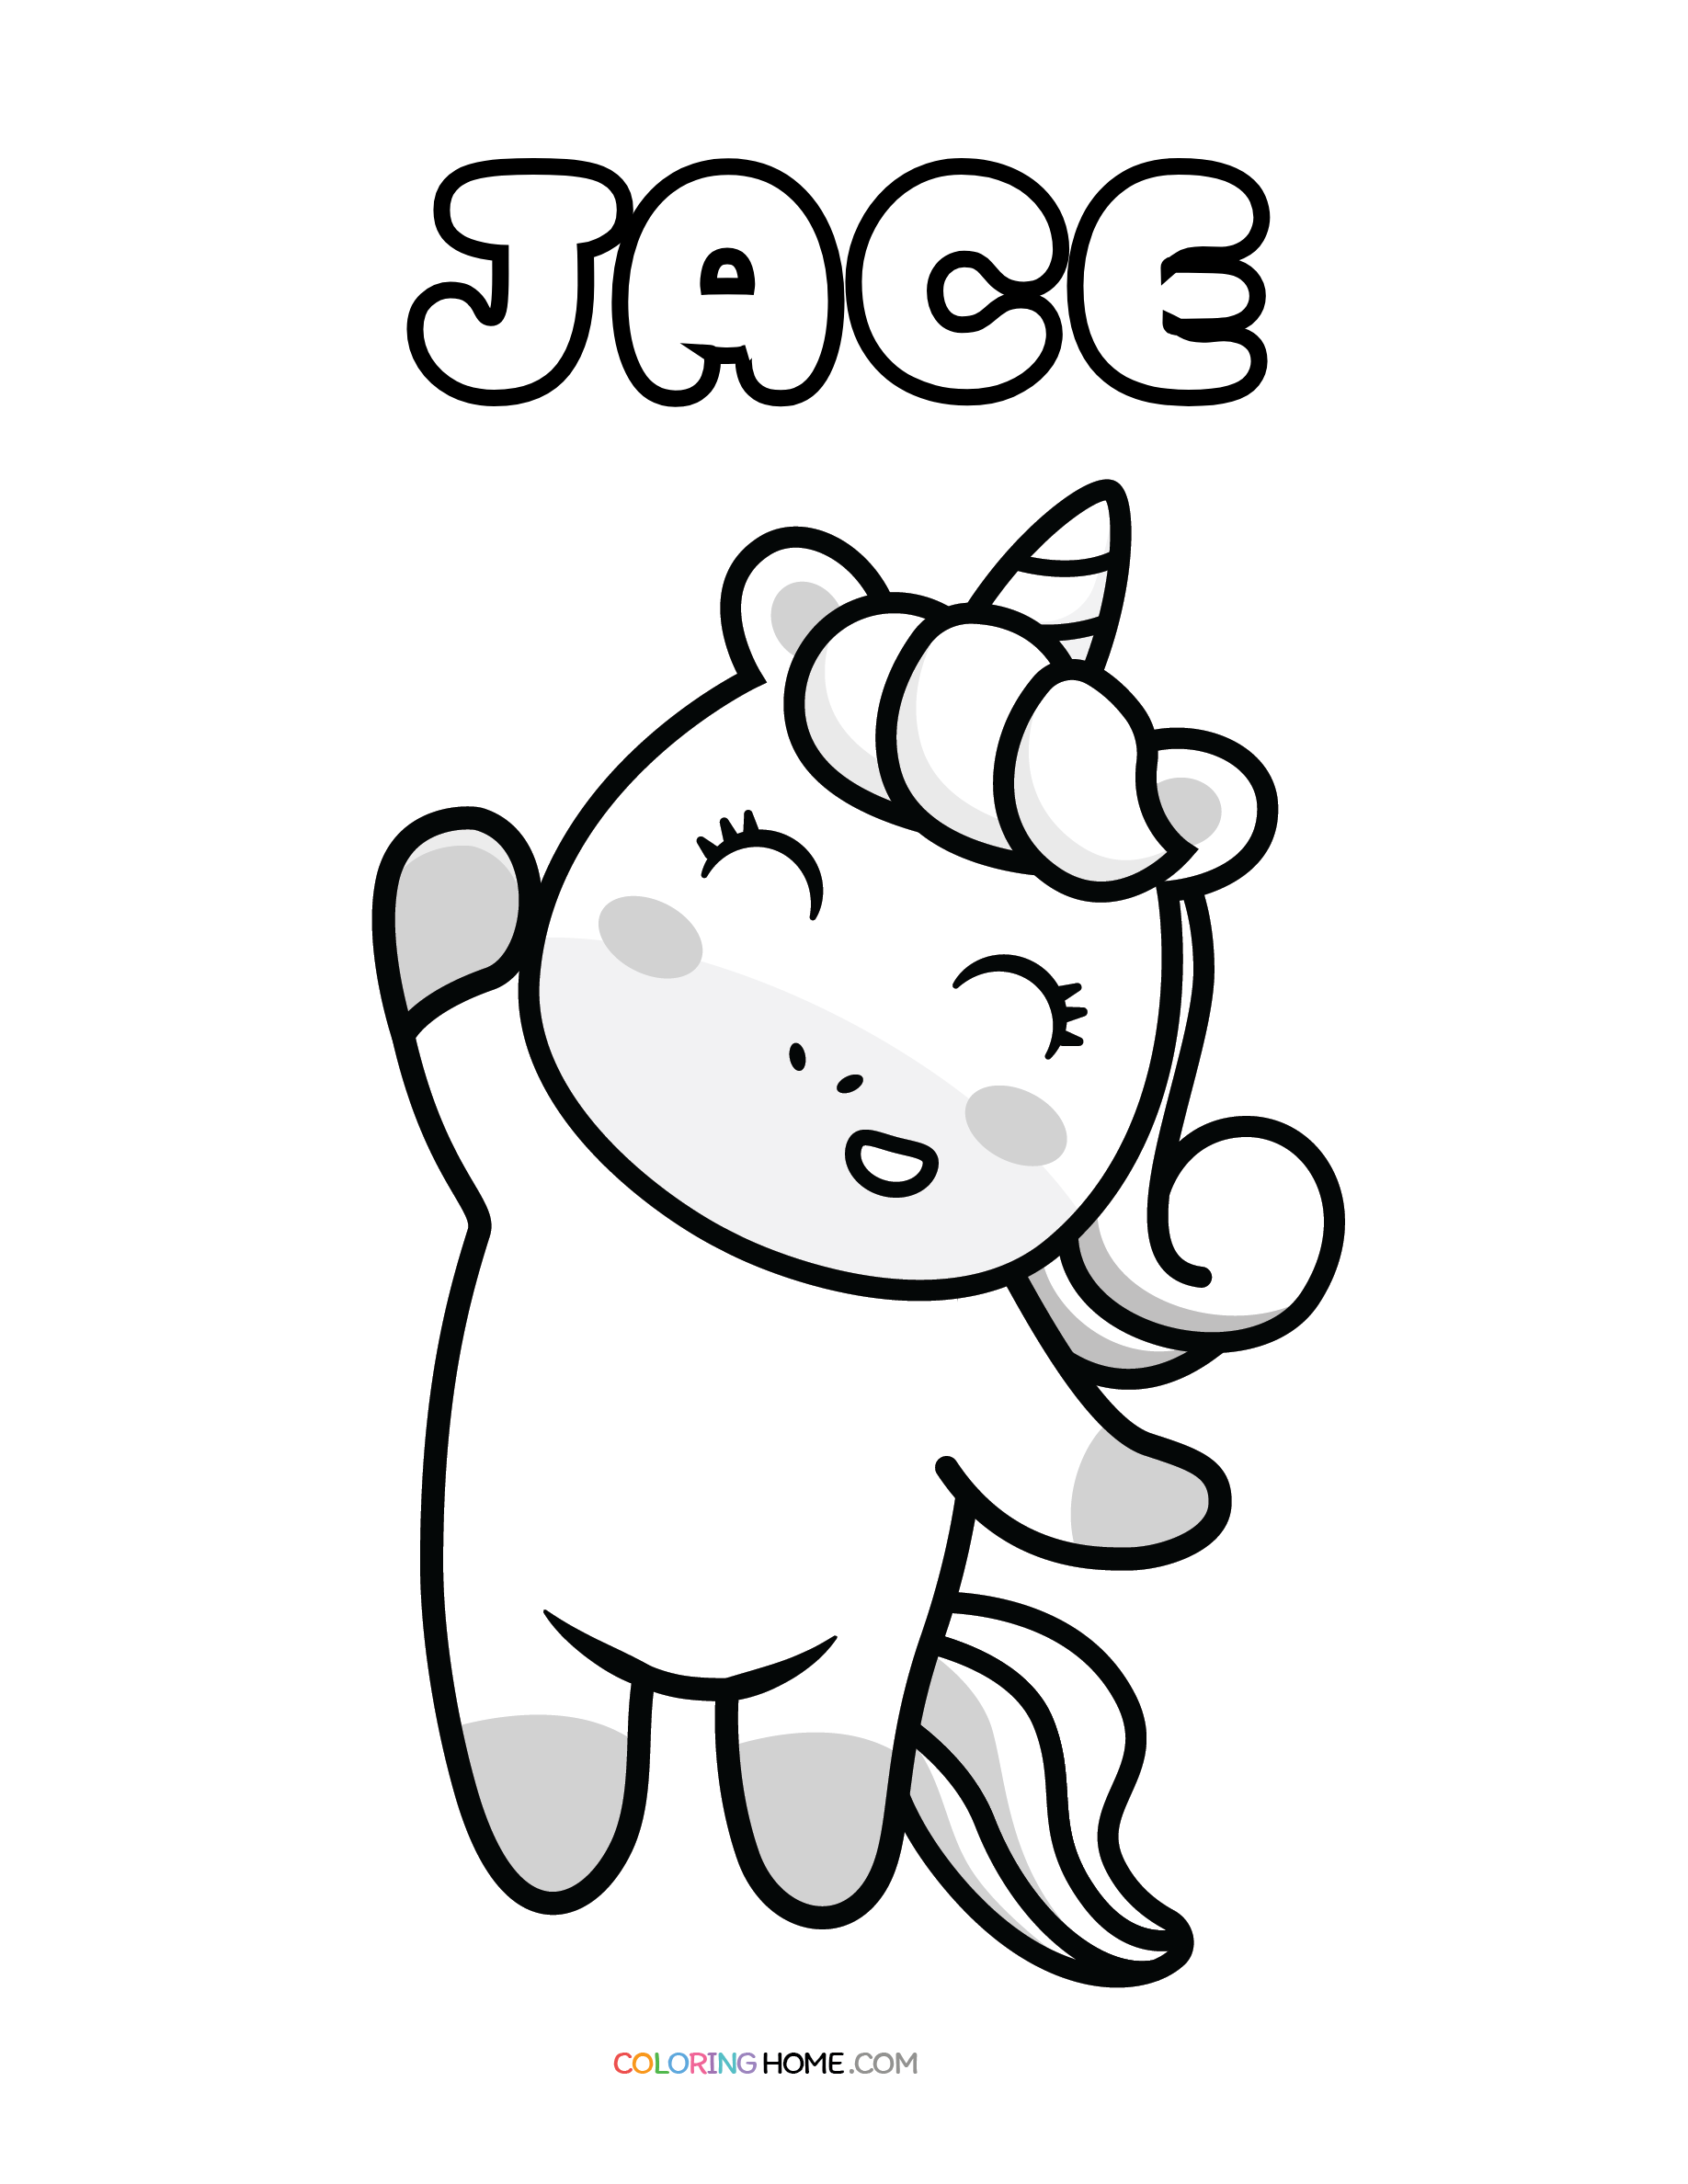 Jace unicorn coloring page